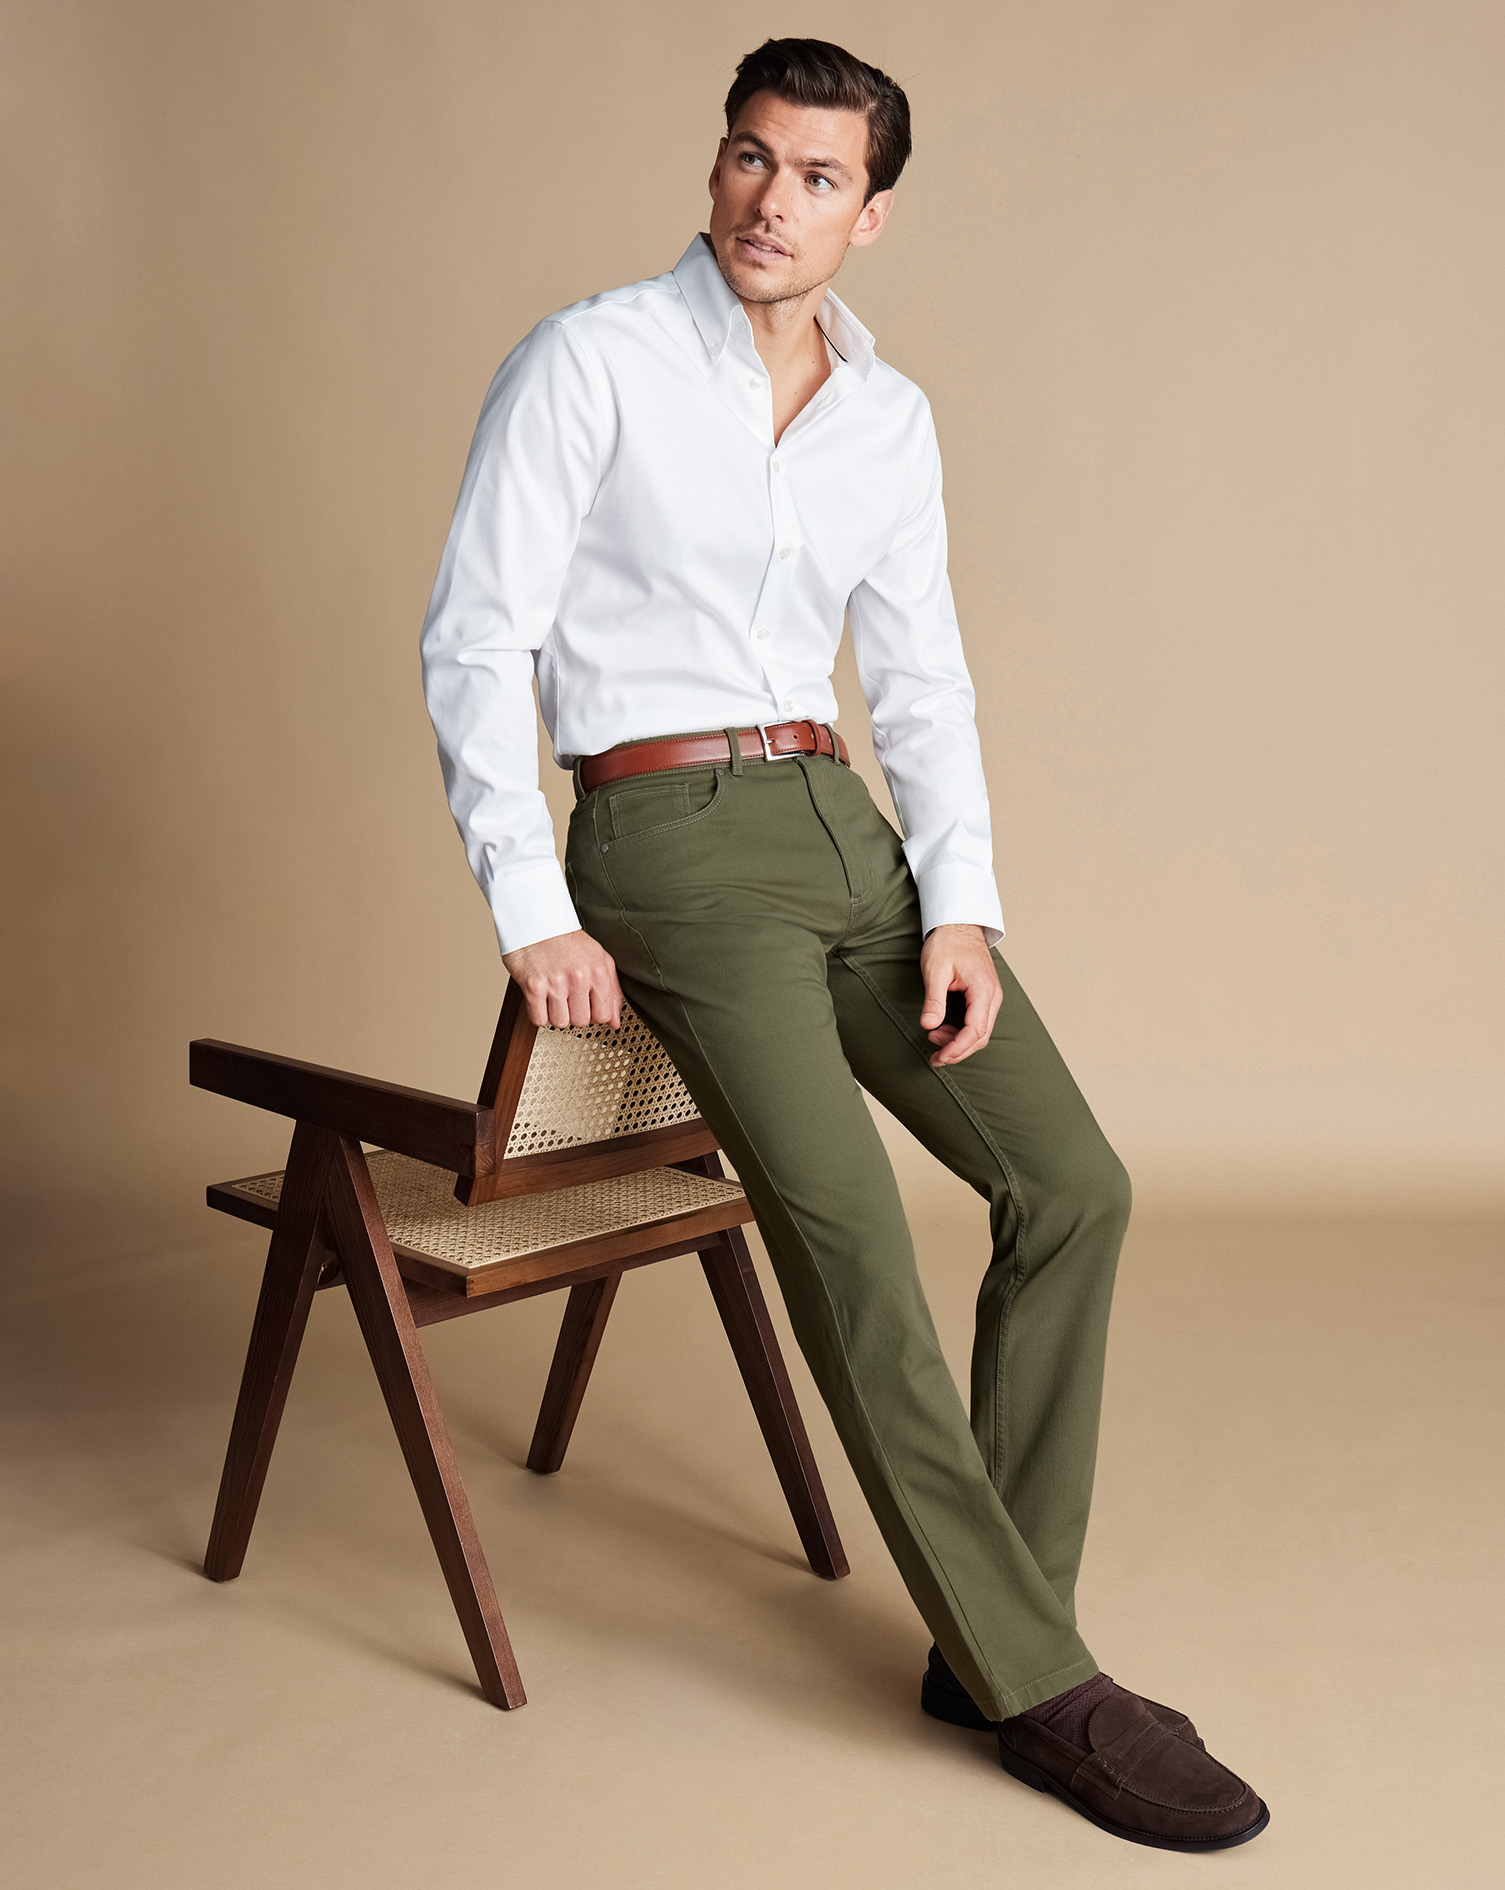 Men's Charles Tyrwhitt Twill 5 Pocket Jeans - Olive Green Size W38 L34 Cotton
